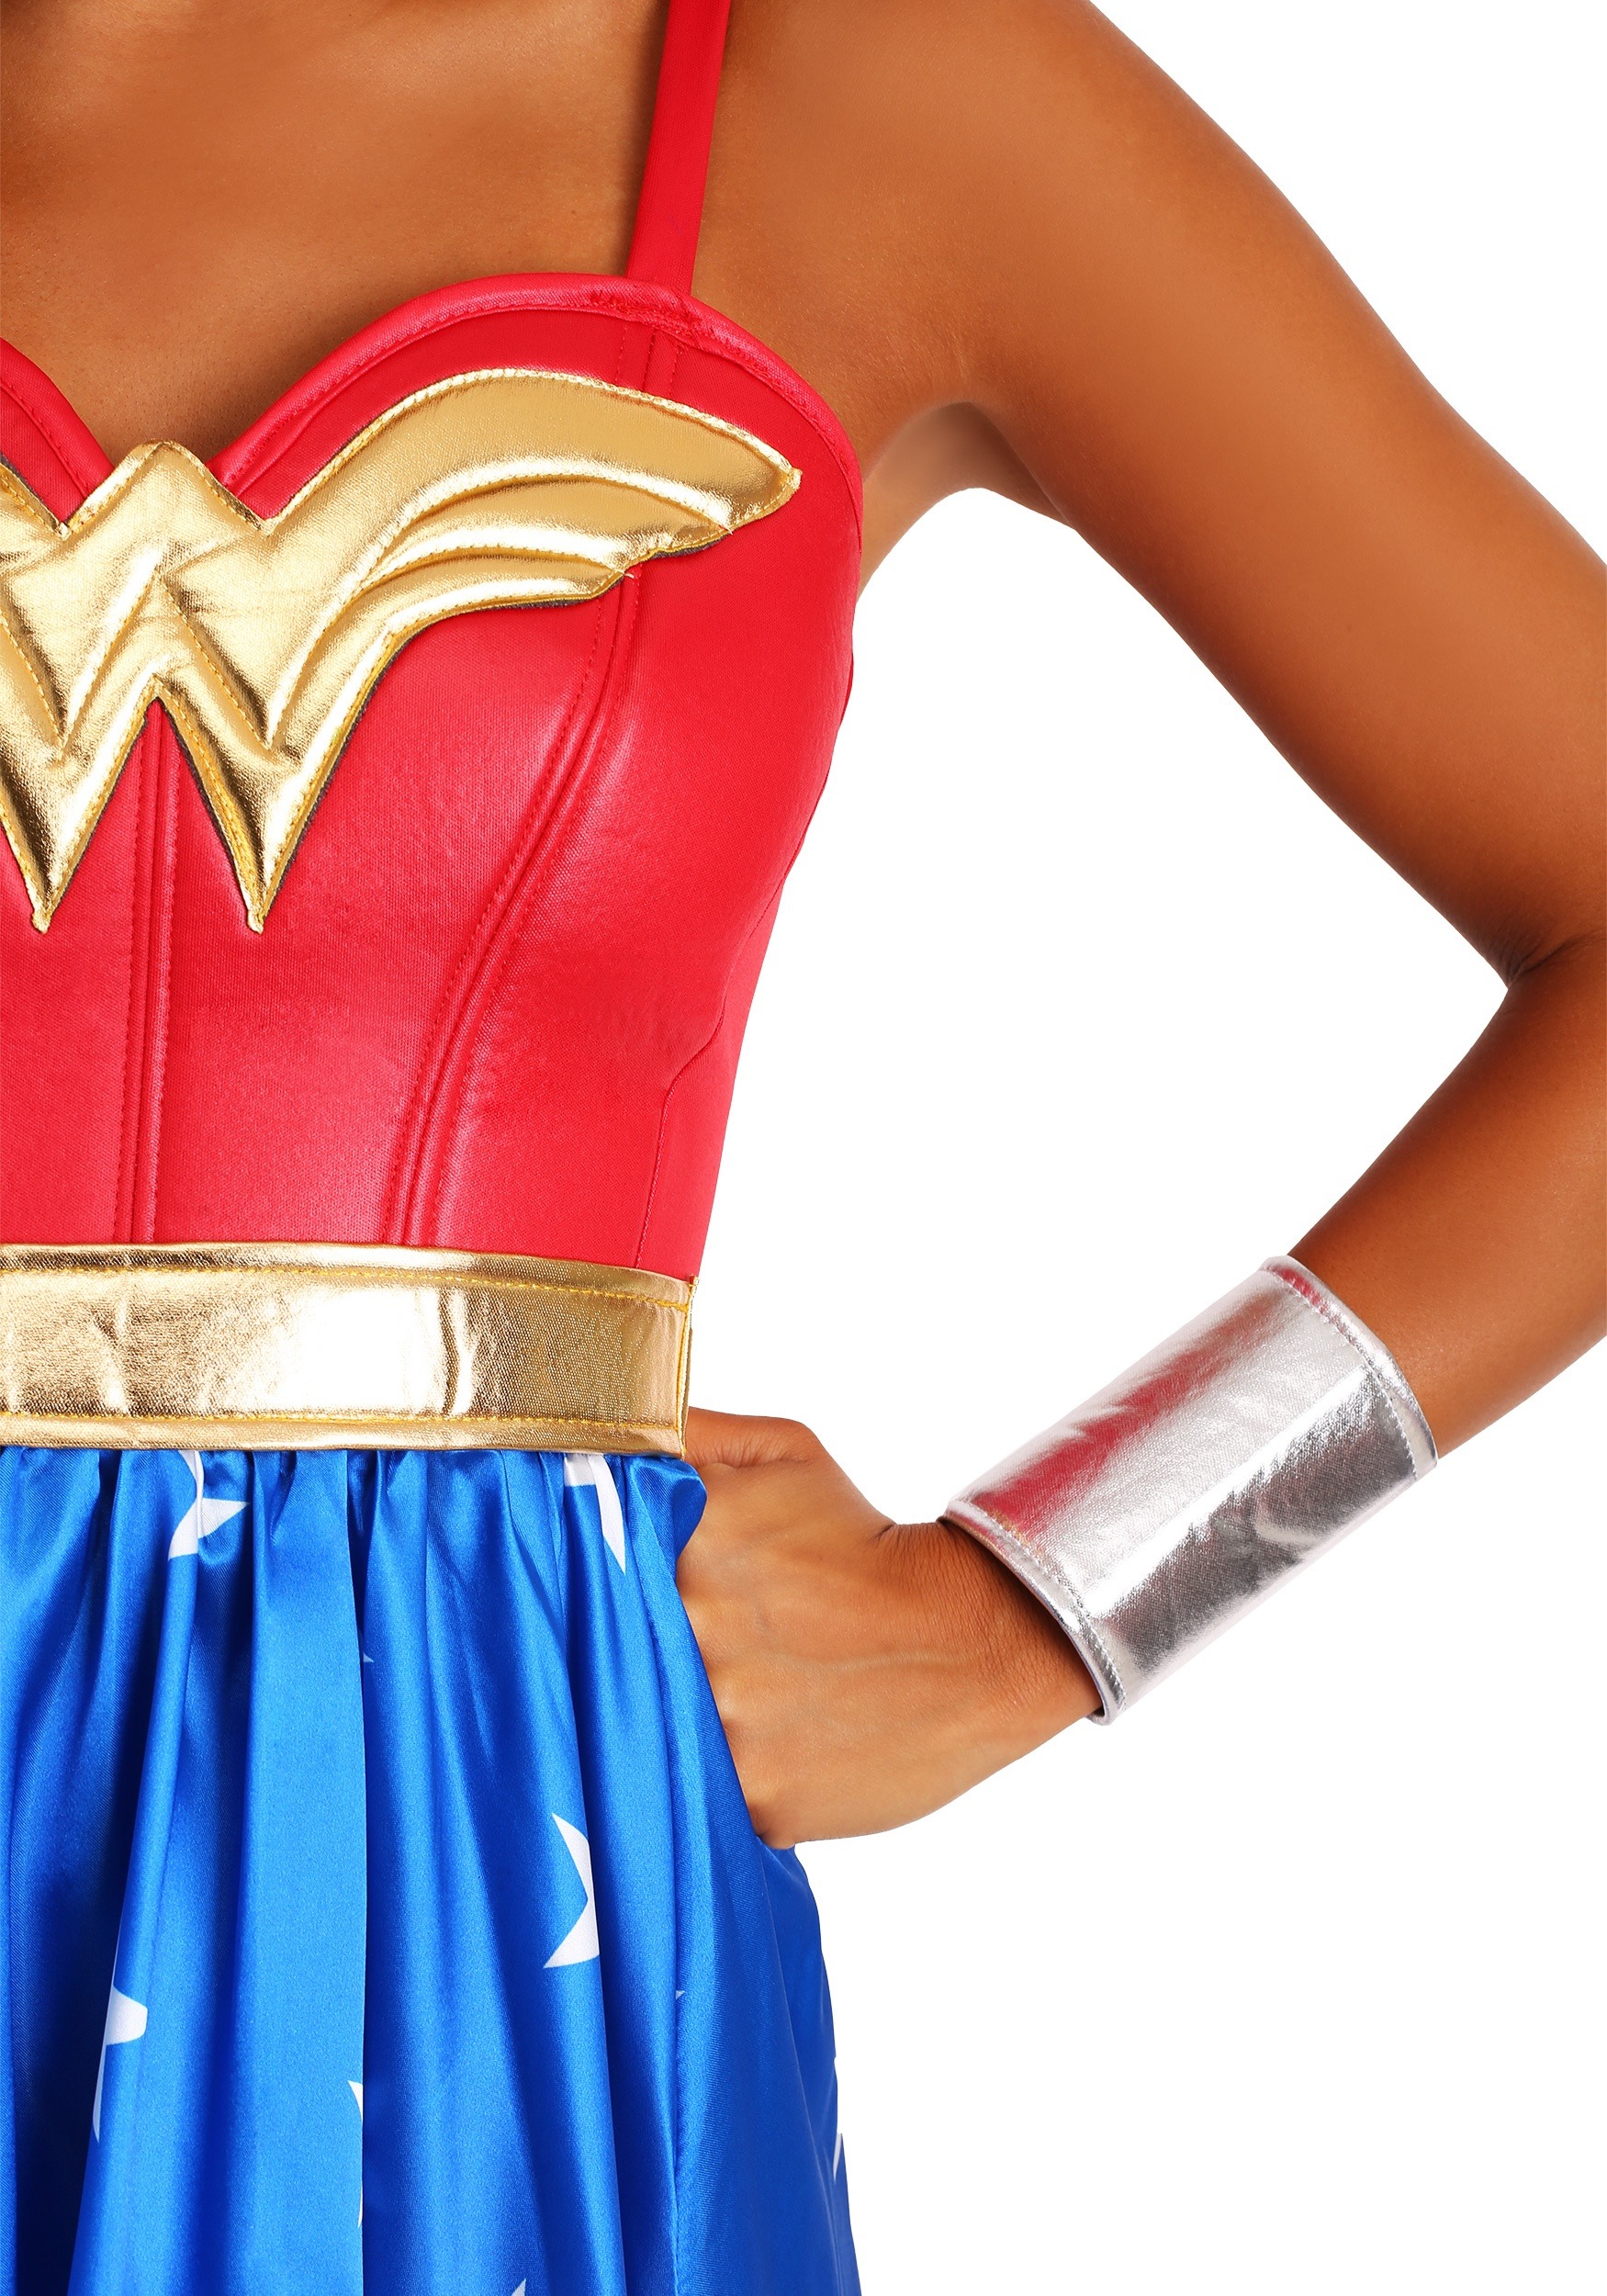 Adult Wonder Woman Plus Size Costume